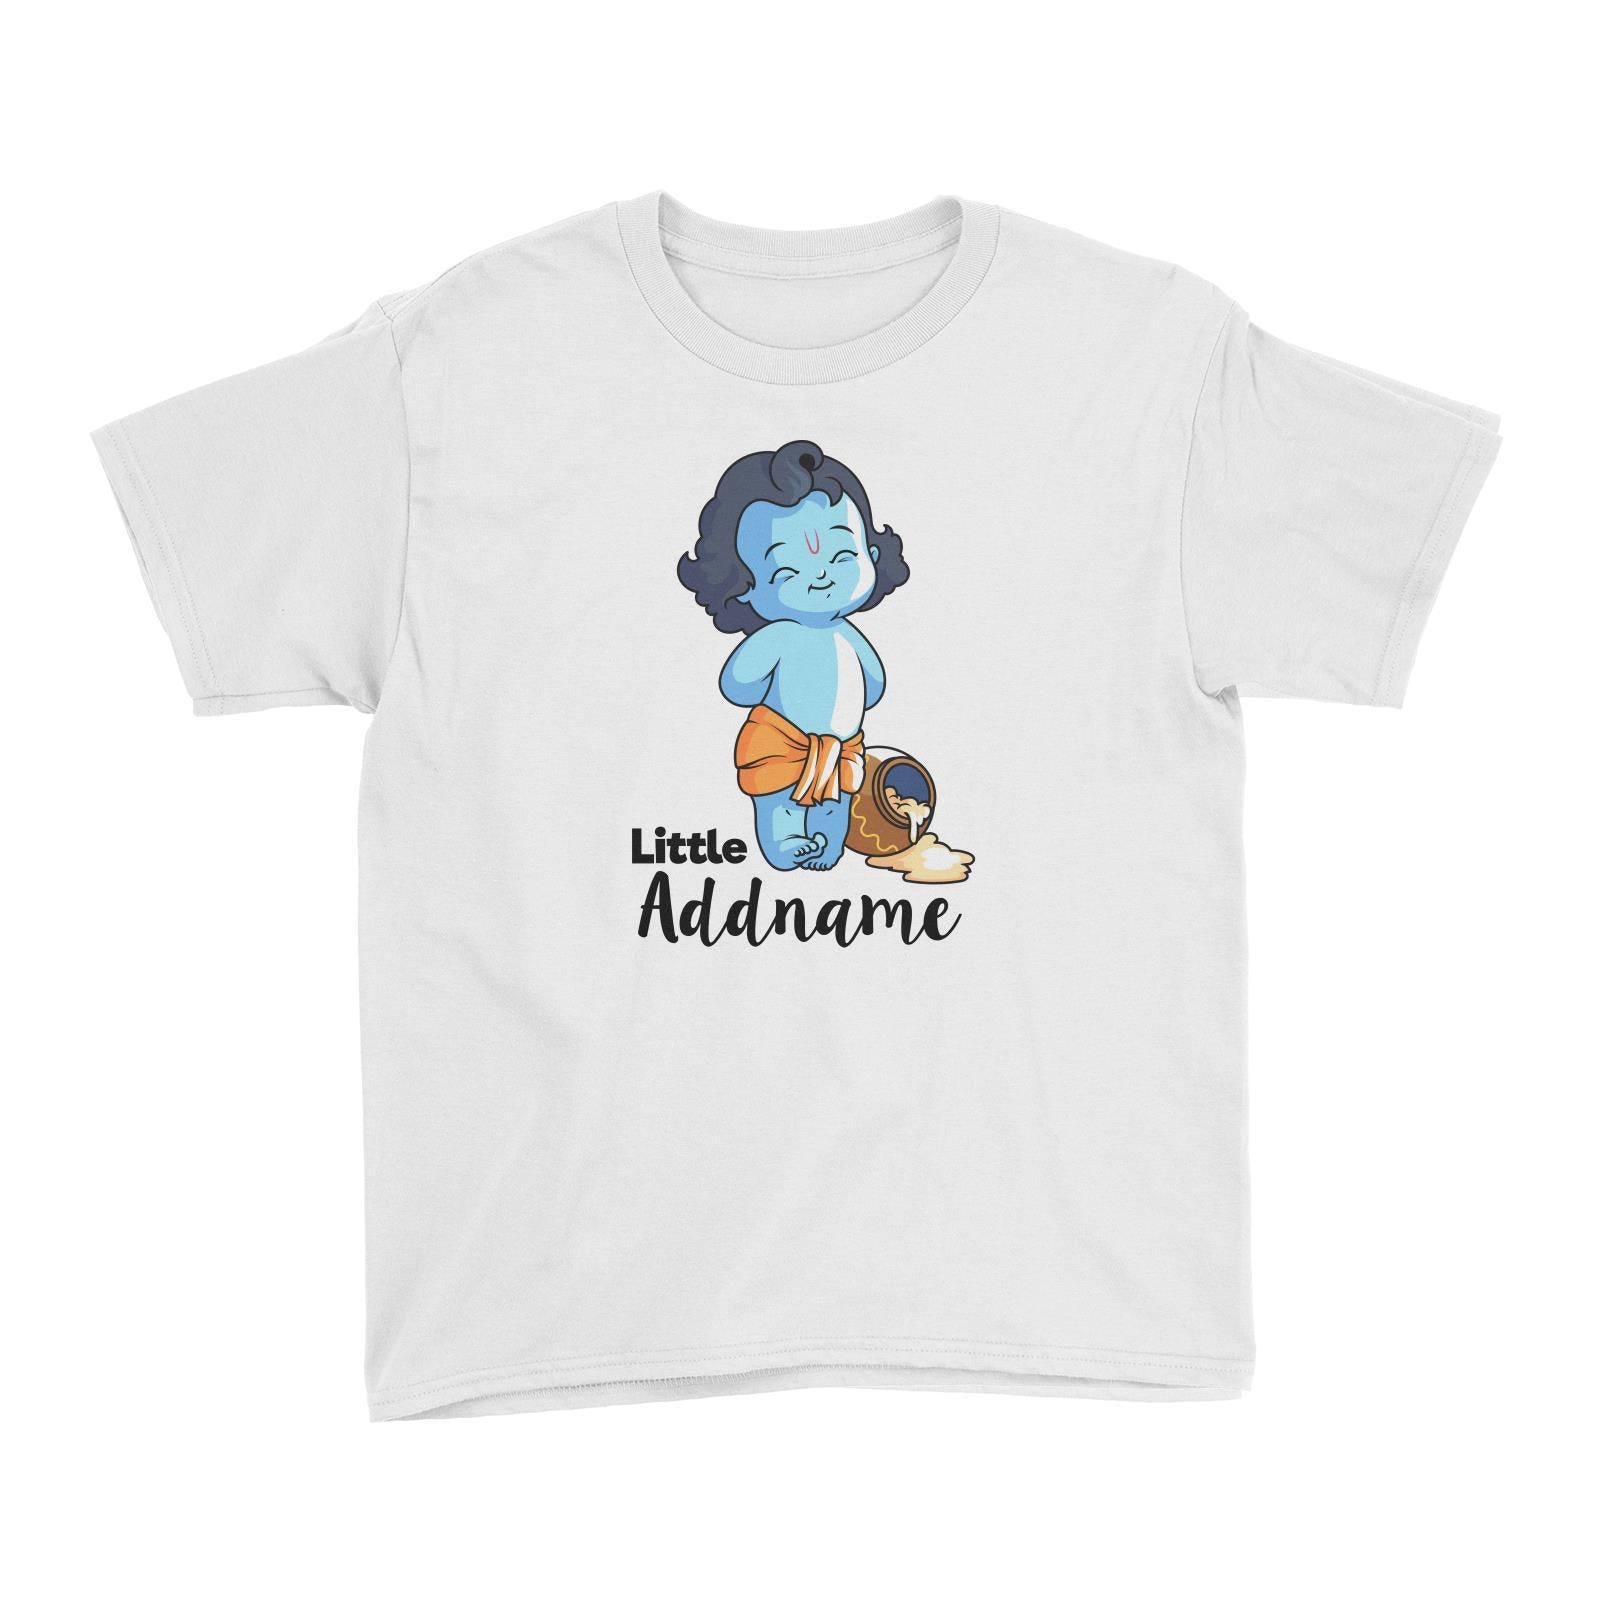 Cute Krishna Standing Little Addname Kid's T-Shirt